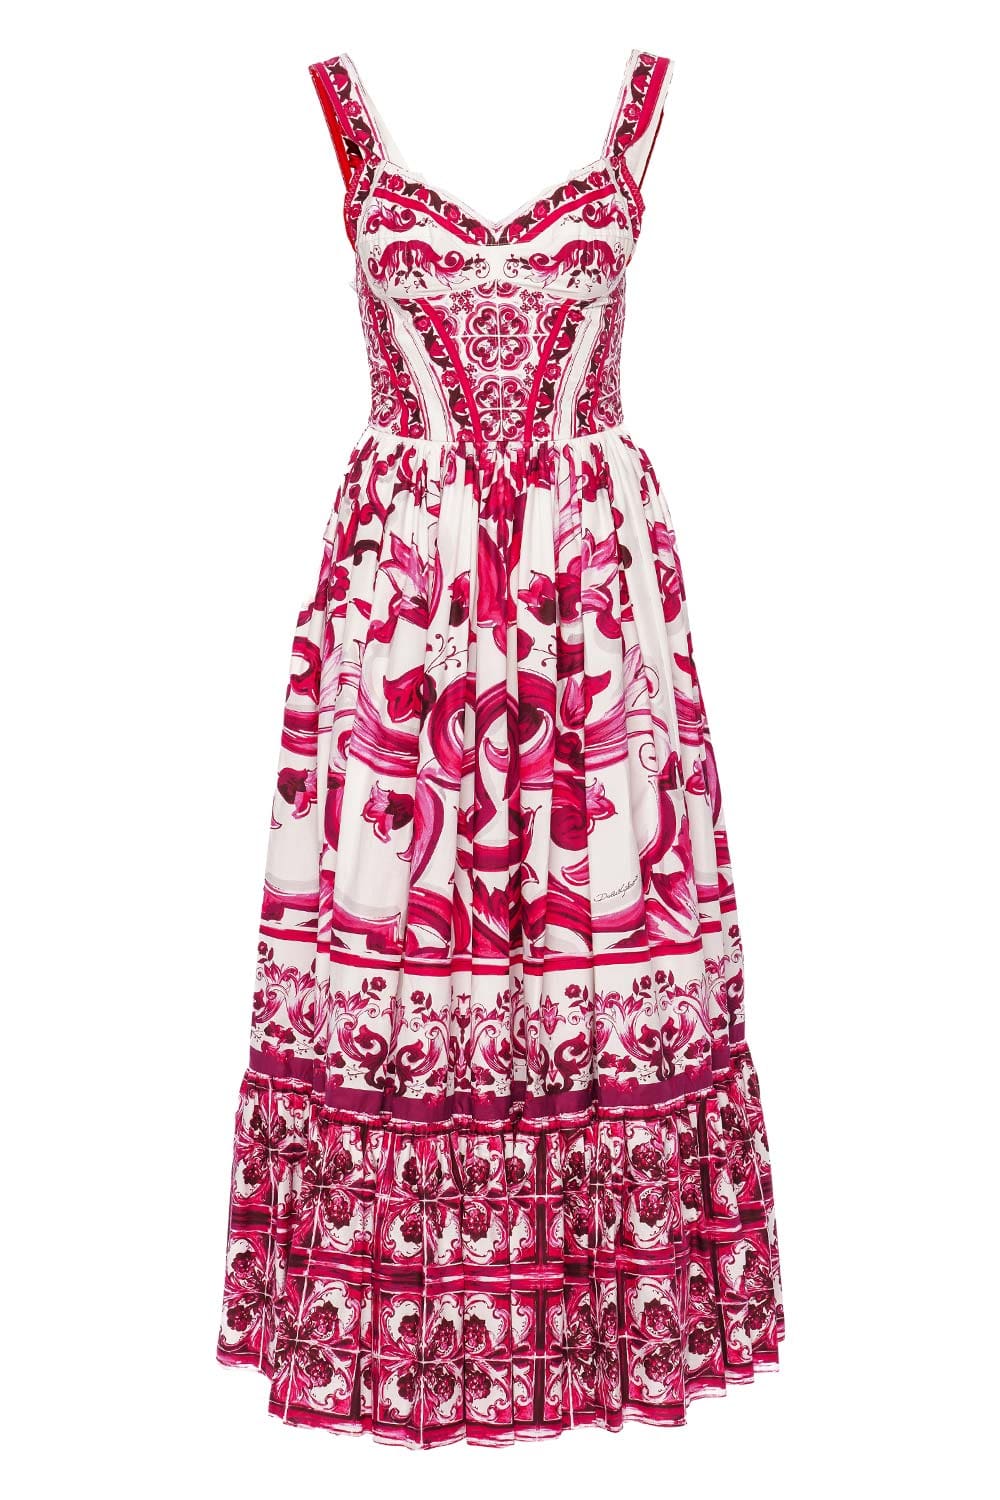 Dolce & Gabbana Tris Maioliche Fuchsia Maxi Dress